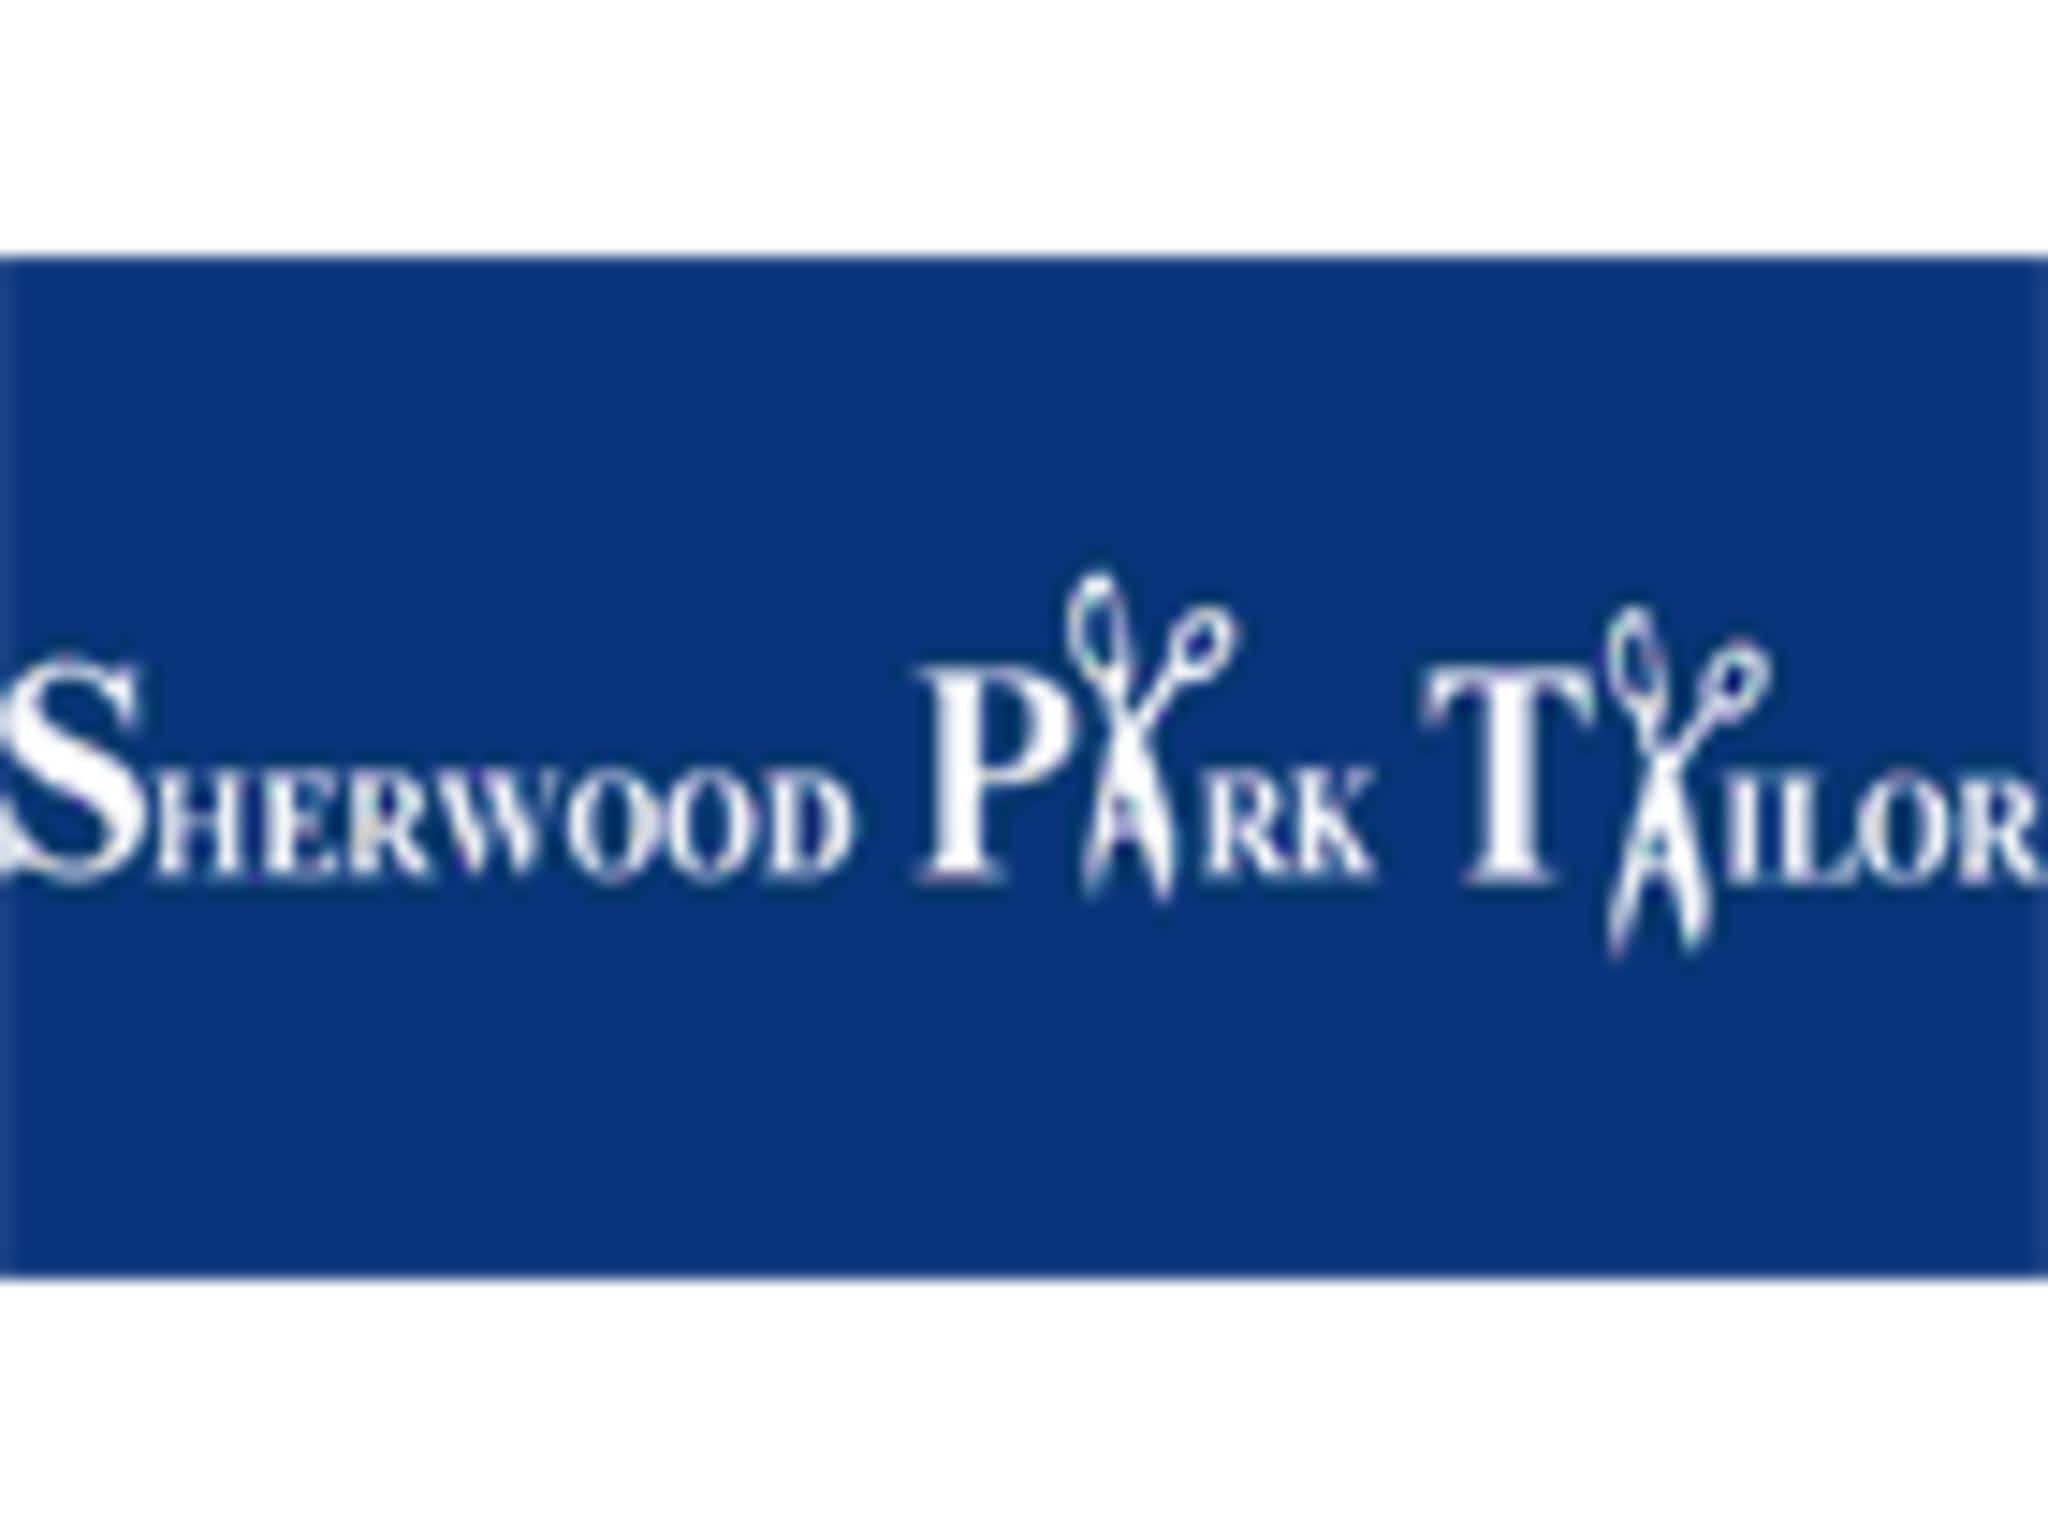 photo Sherwood Park Tailors